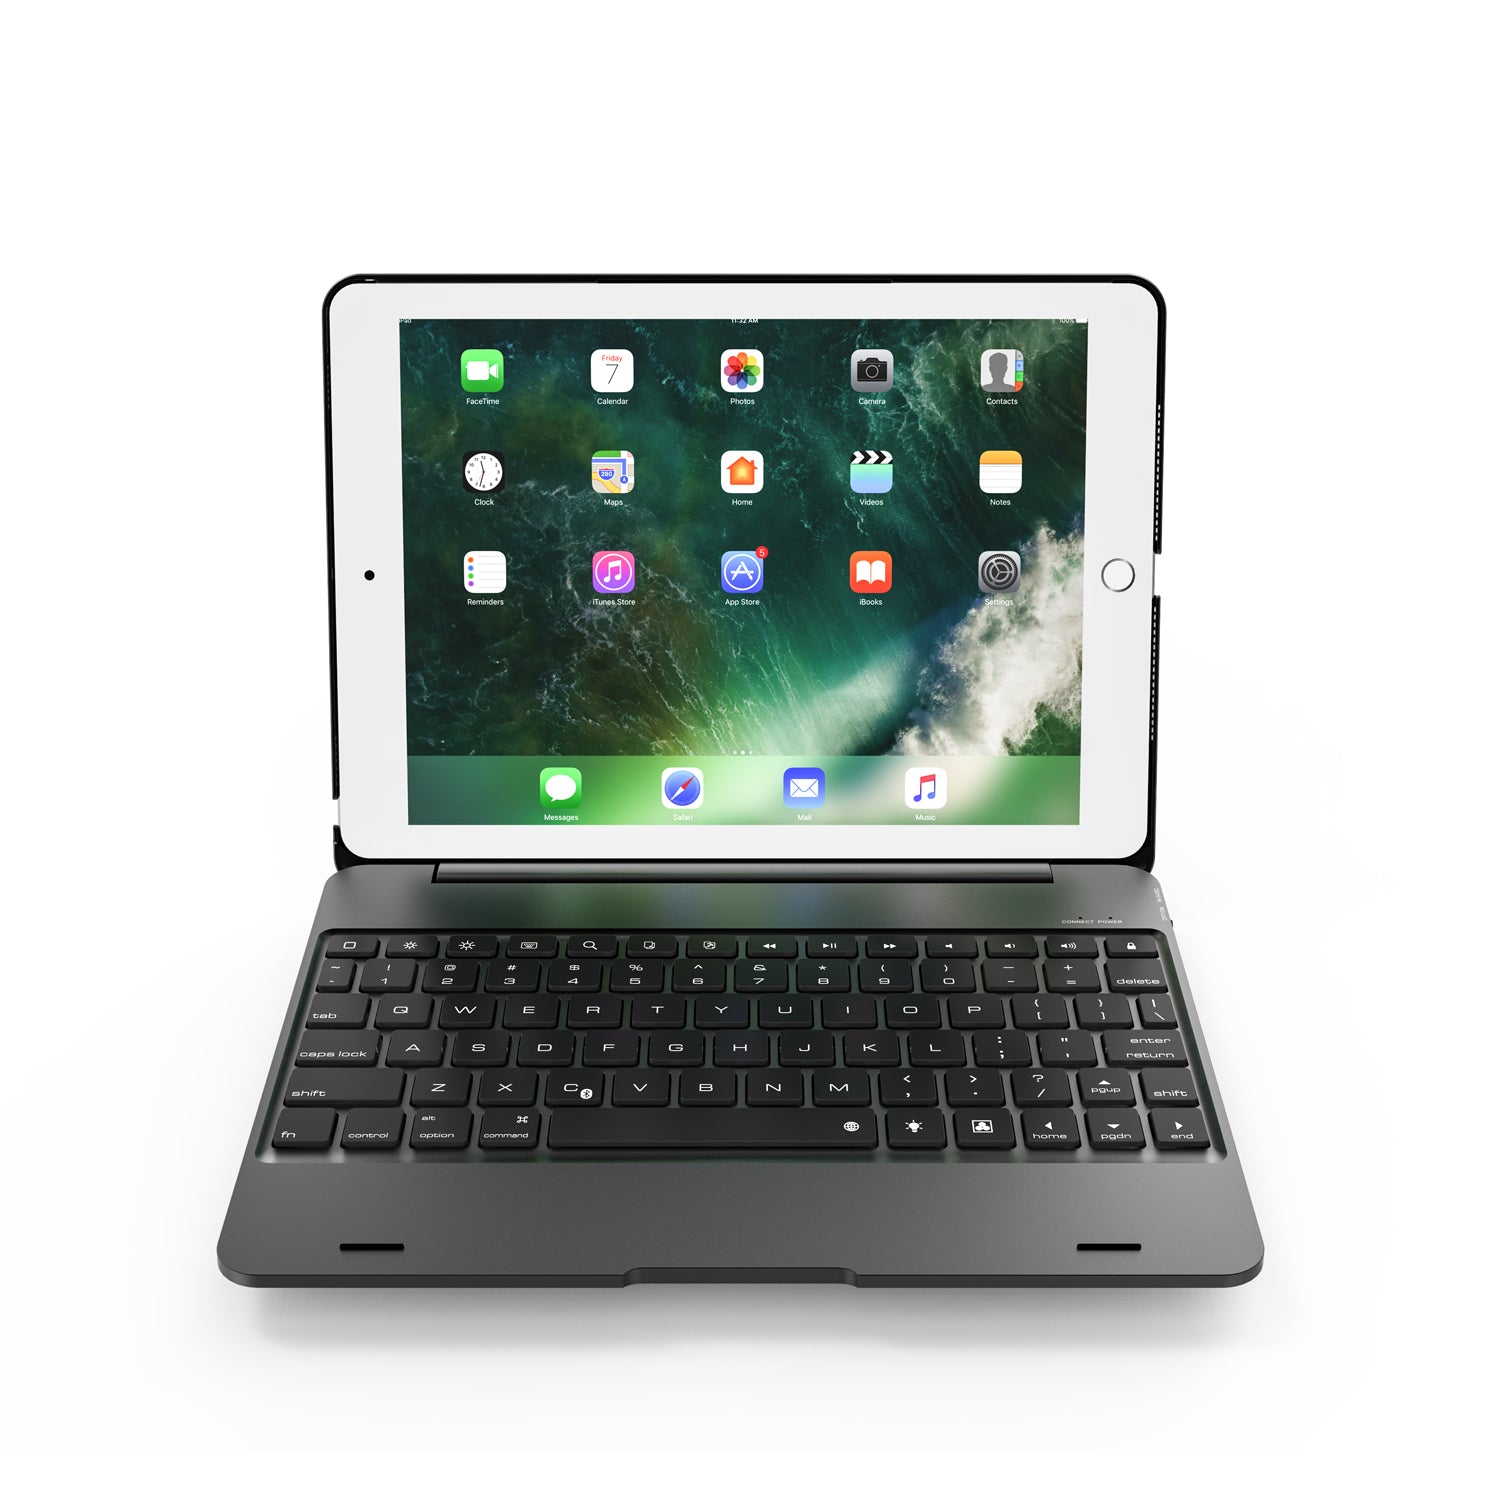 Keyboard Case for 7.9” iPad mini (1-3 Gen) - Gold & Cherry